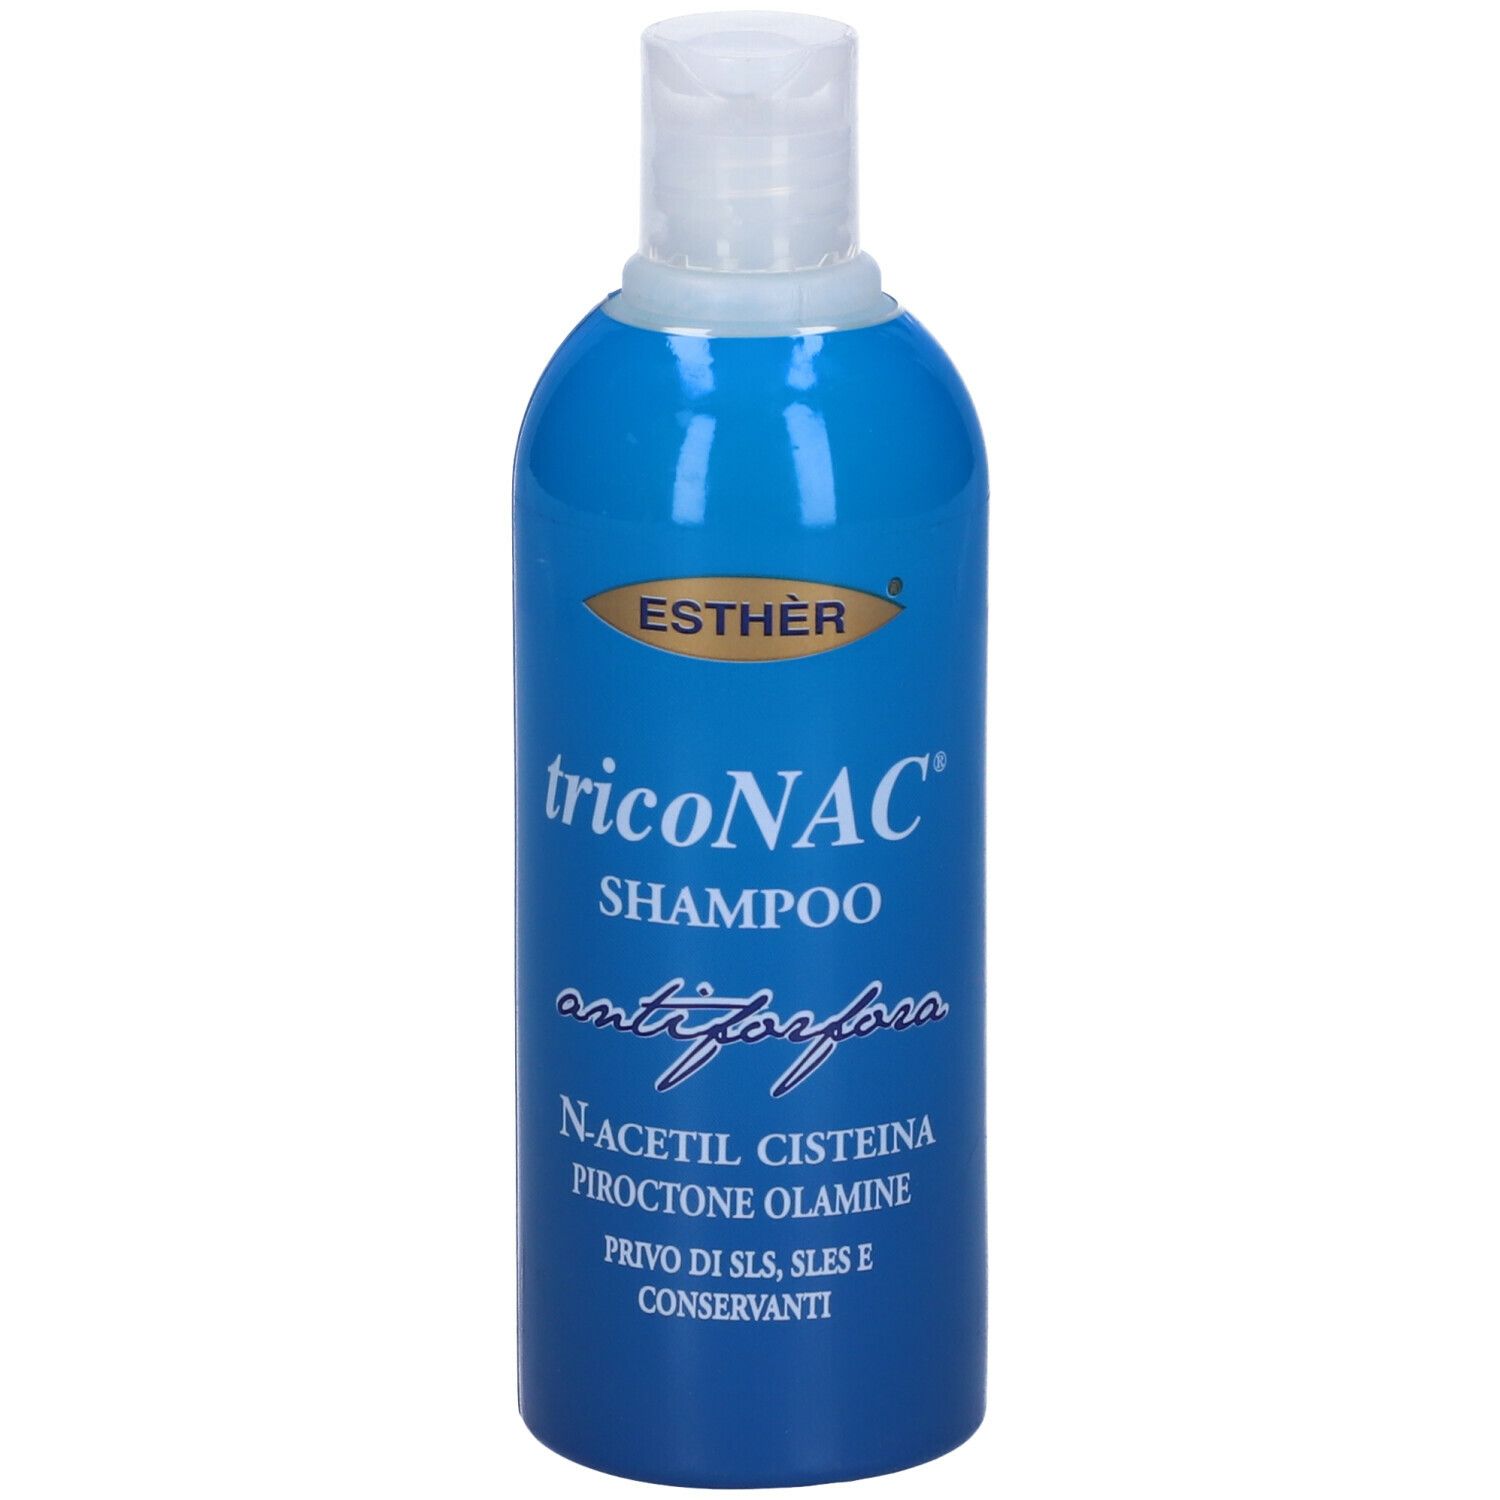 Difa Cooper - Triconac Shampoo Antiforfora 200ml - Rimedio Efficace contro la Forfora